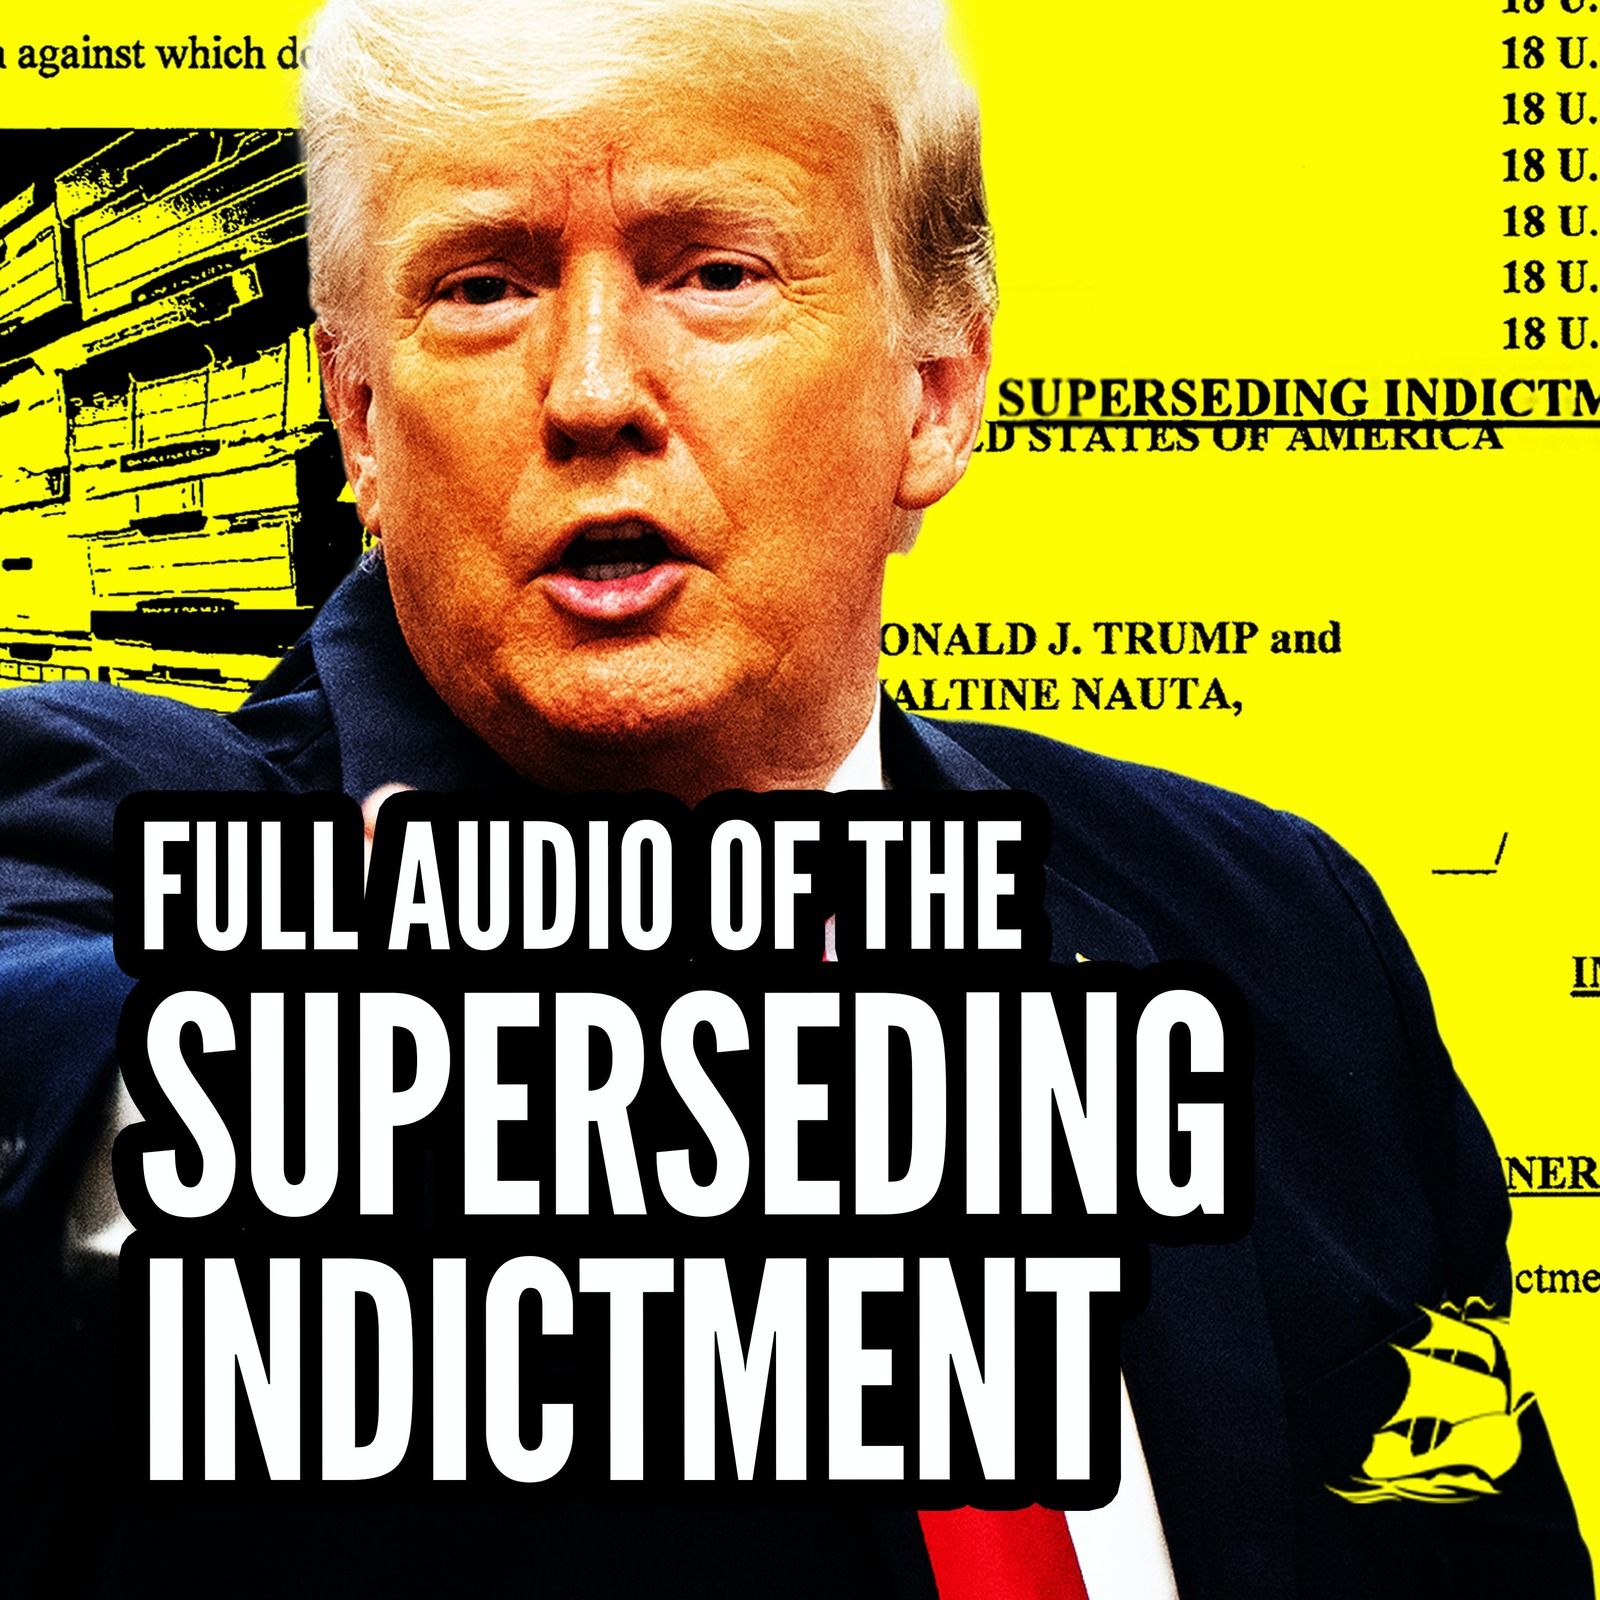 Bonus Episode: Listen to the Superseding Indictment